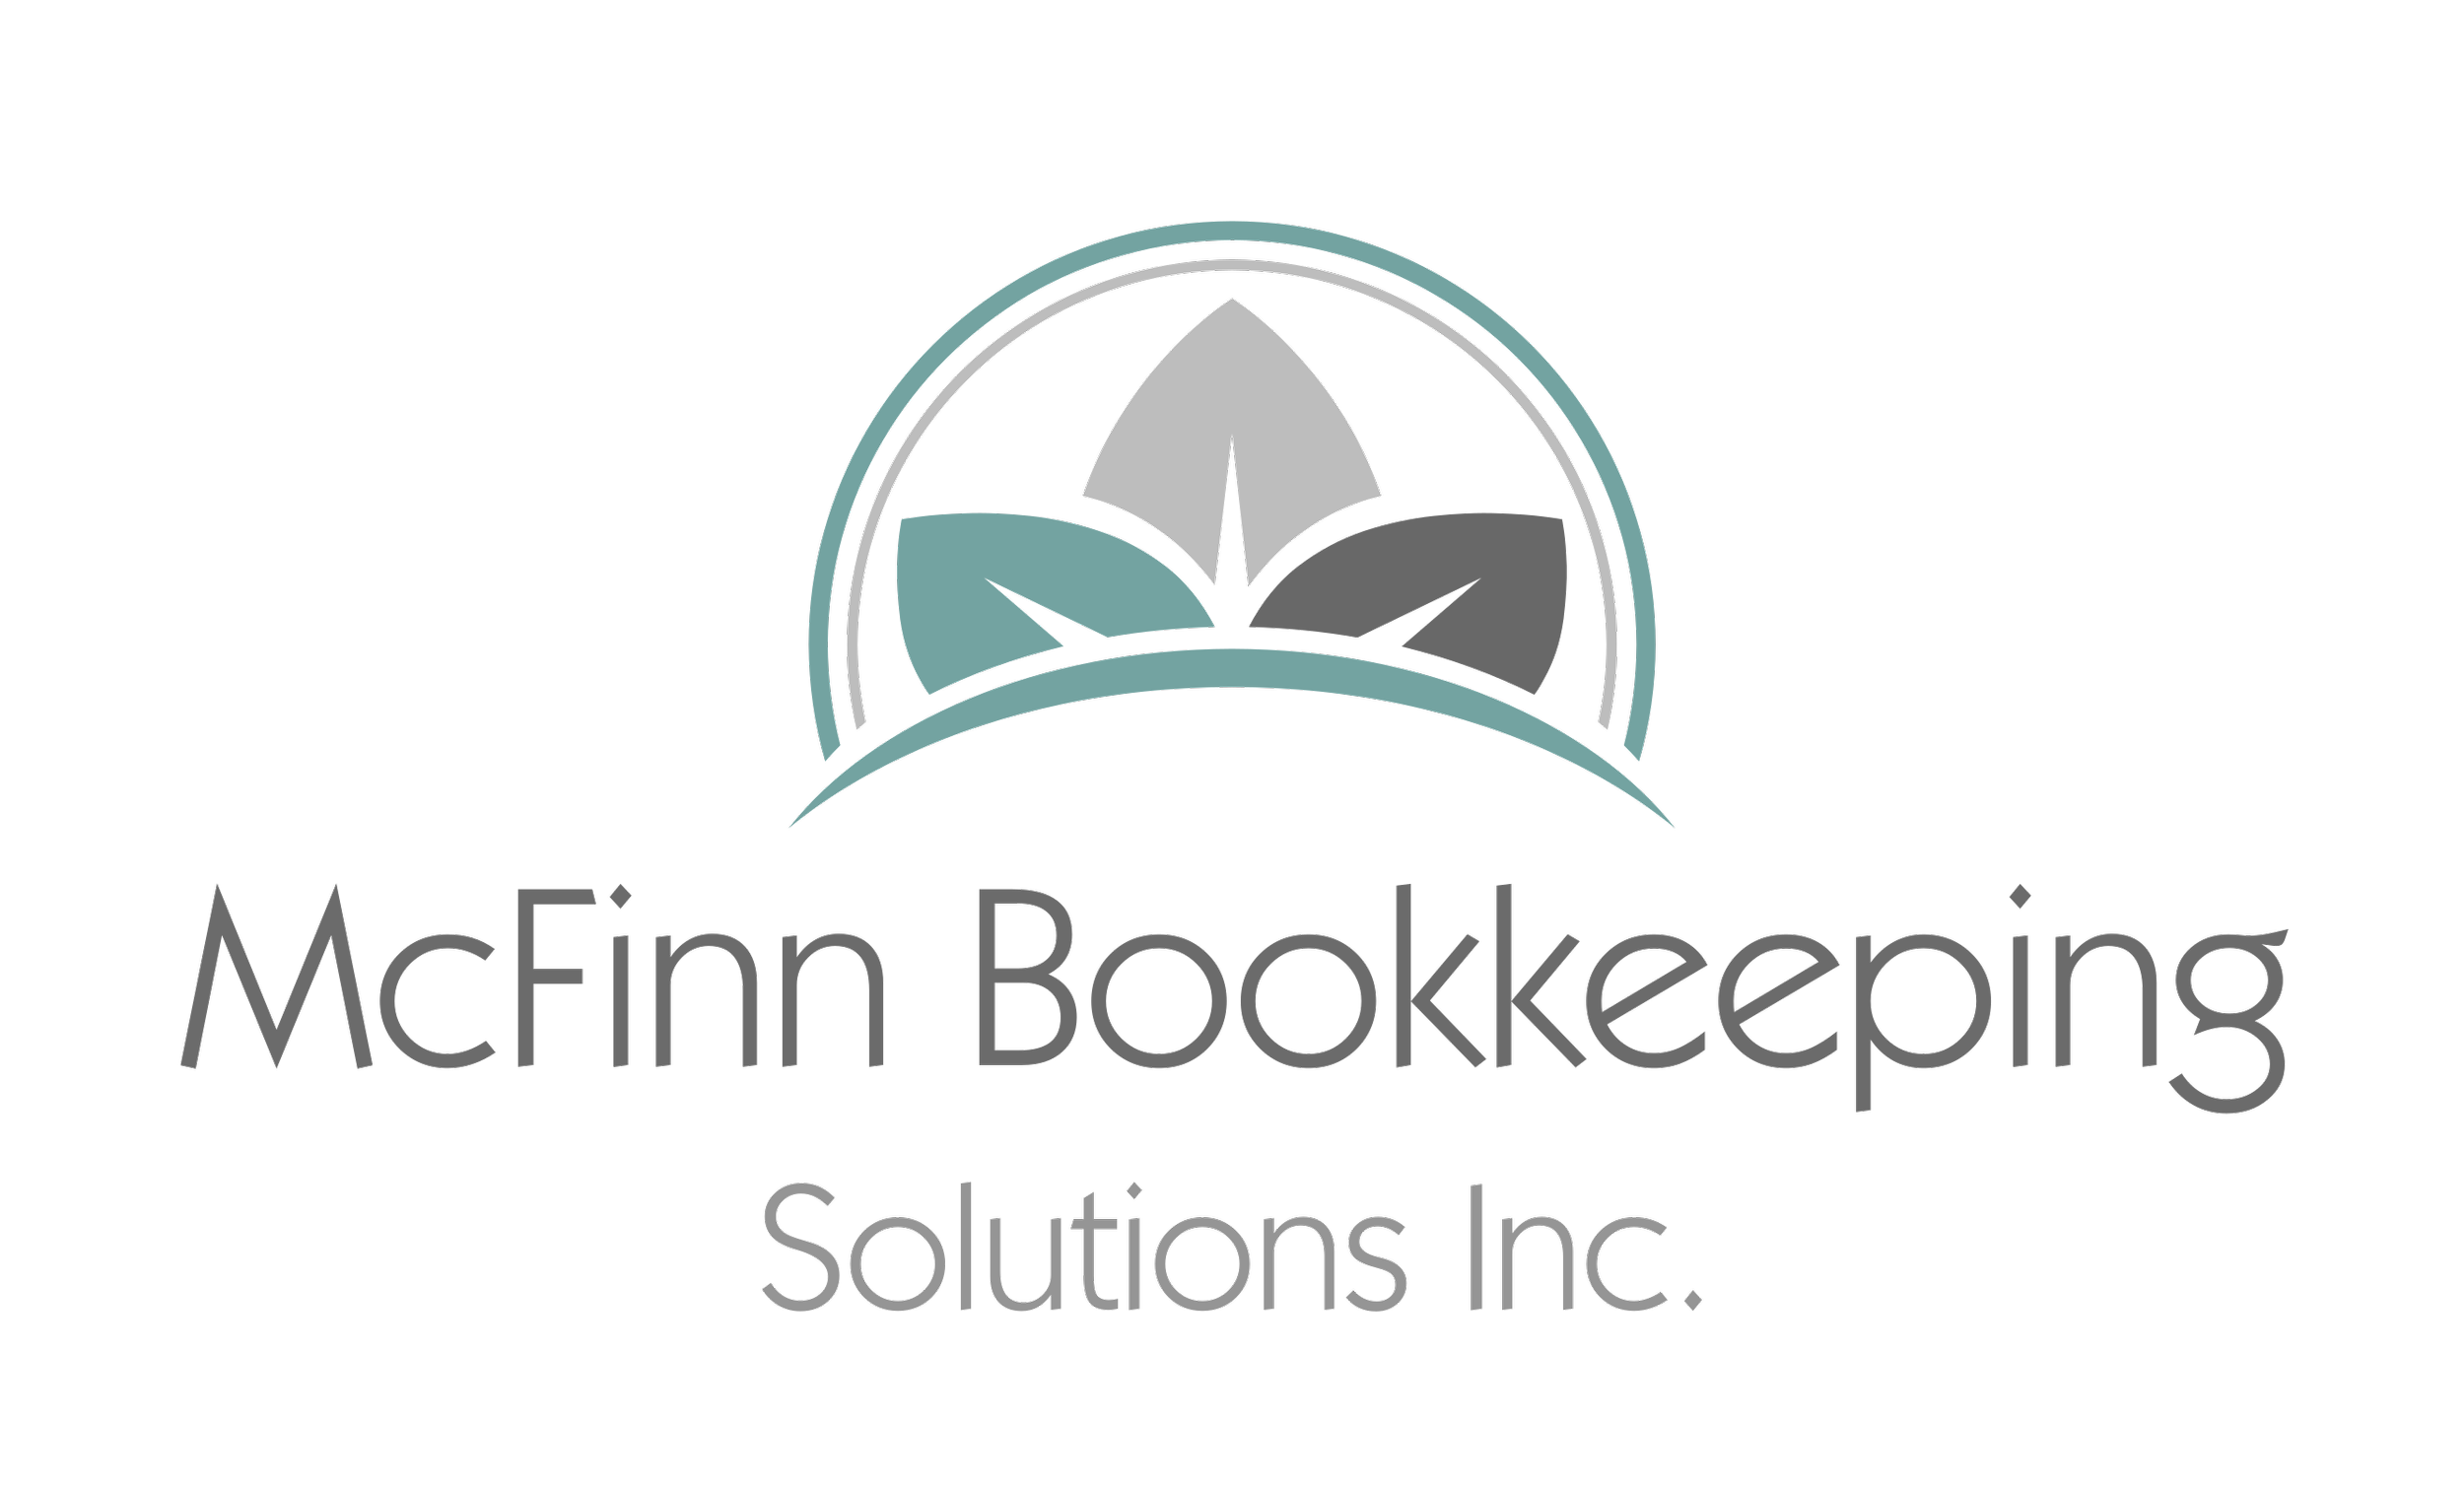 McFinn Bookkeeping Solutions Inc.